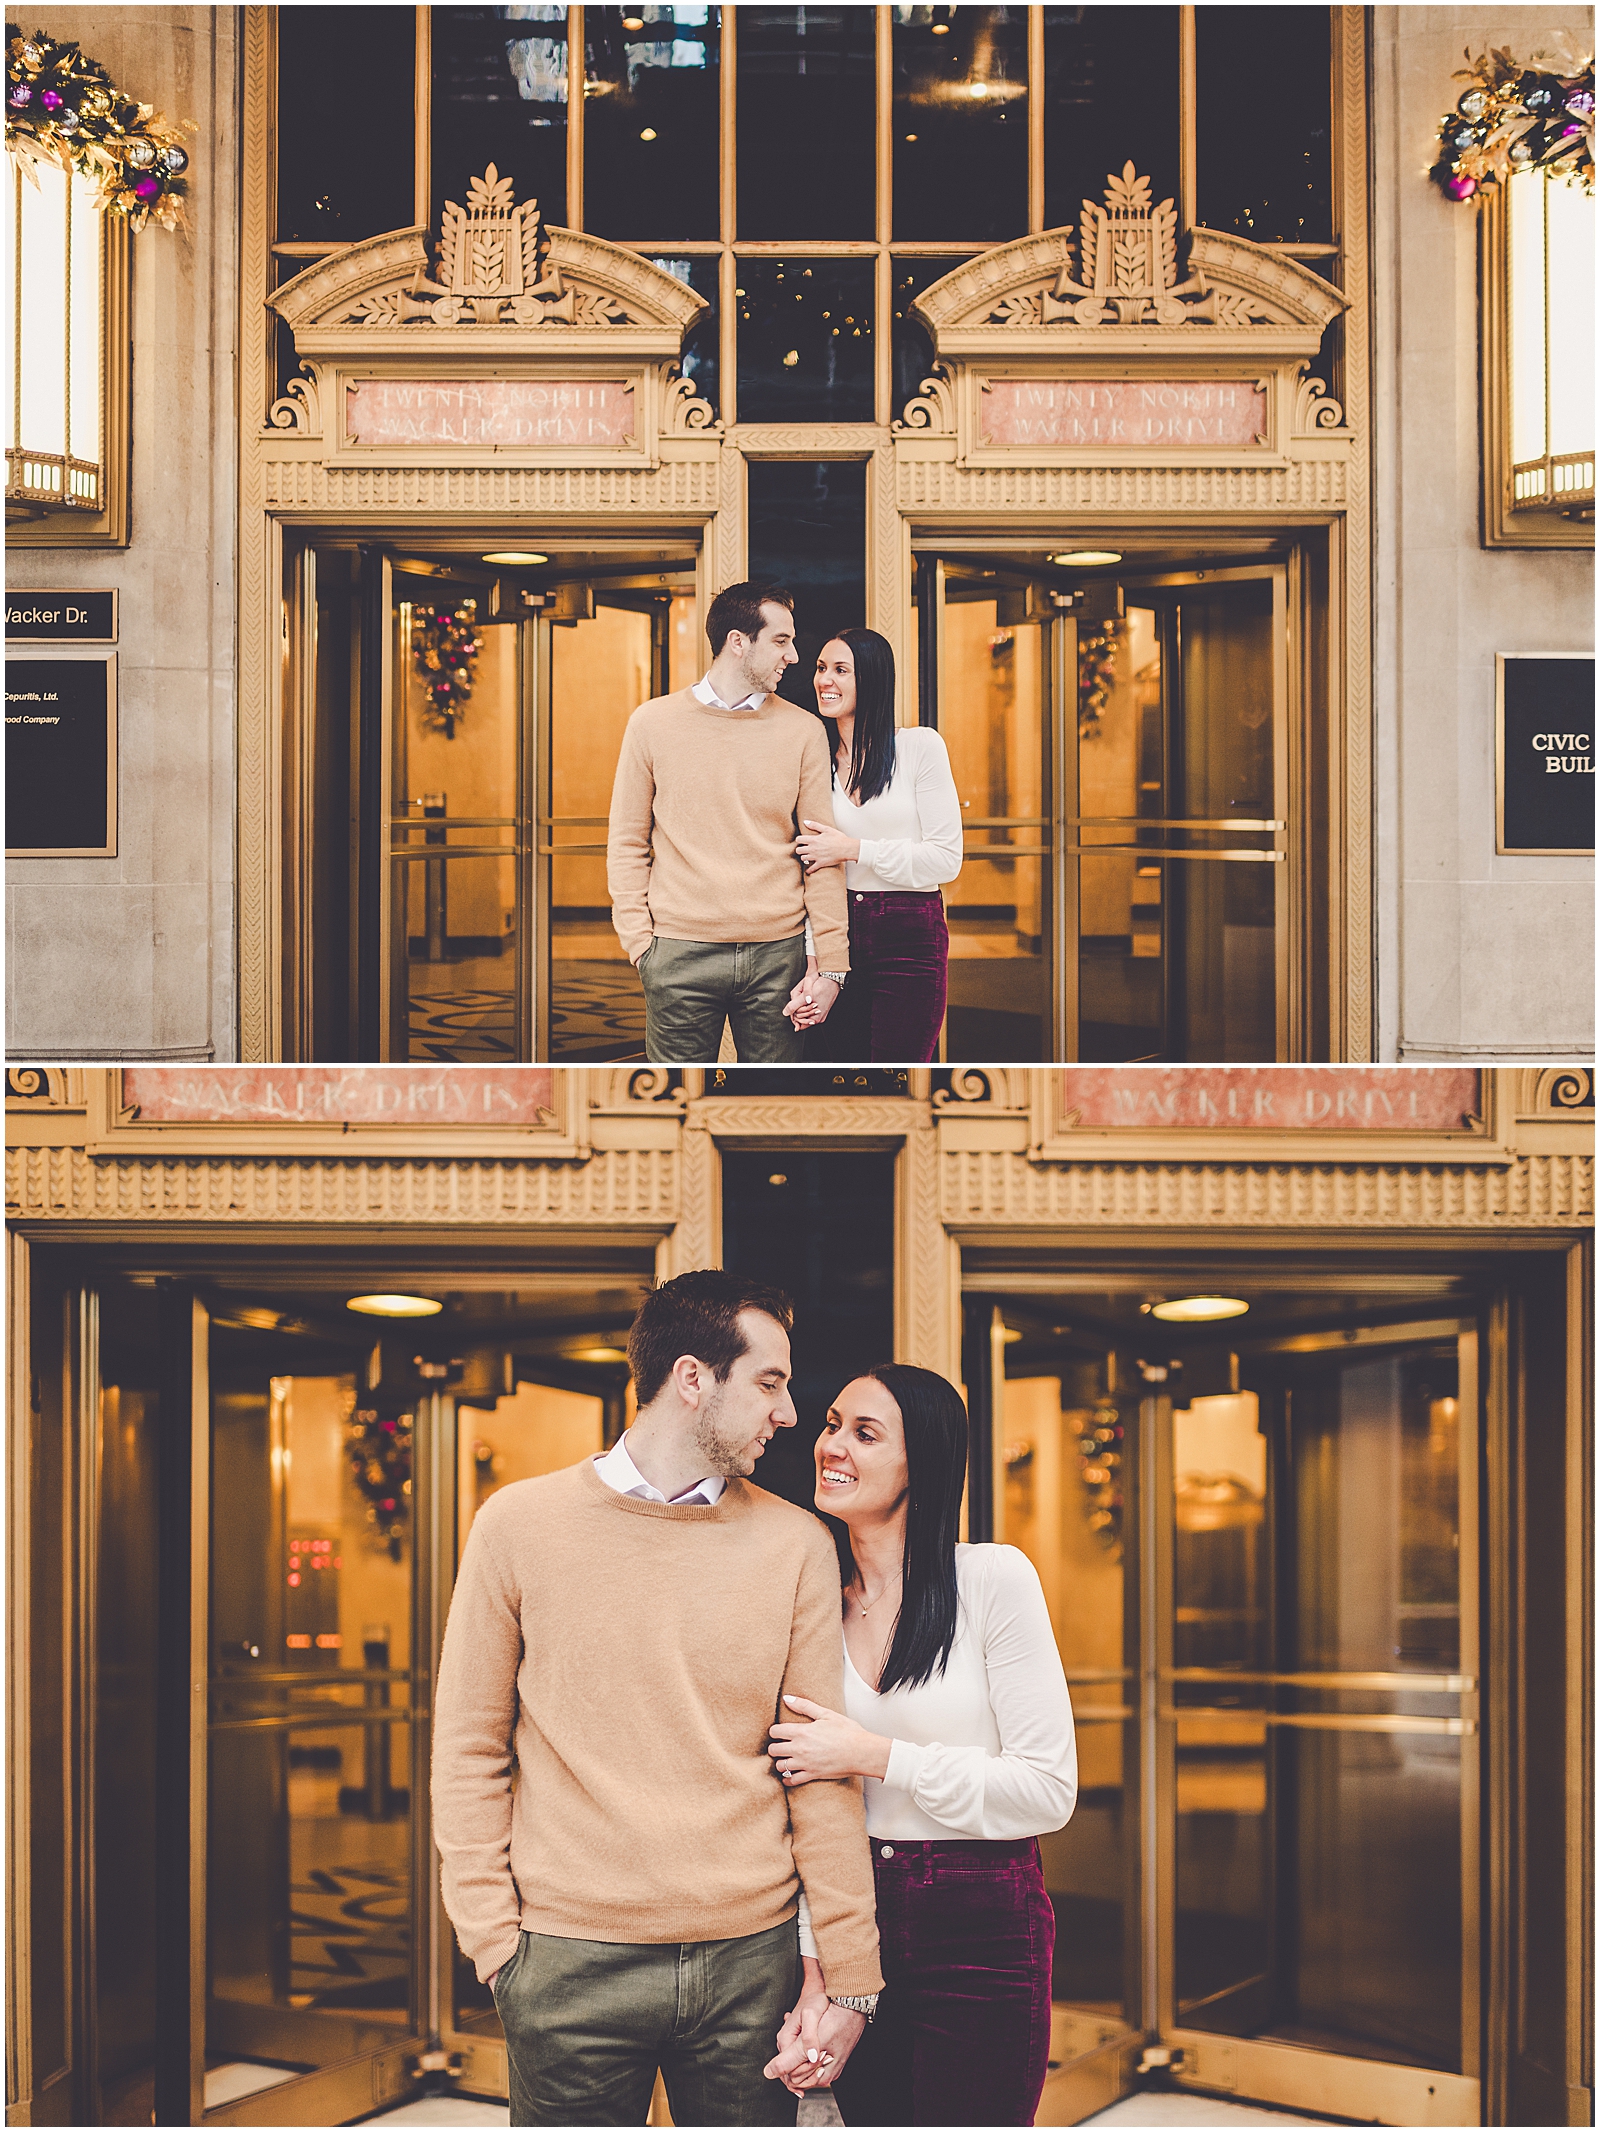 Delaney and Corey's Lyric Opera engagement photos in Chicago with Chicagoland wedding photographer Kara Evans Photographer.